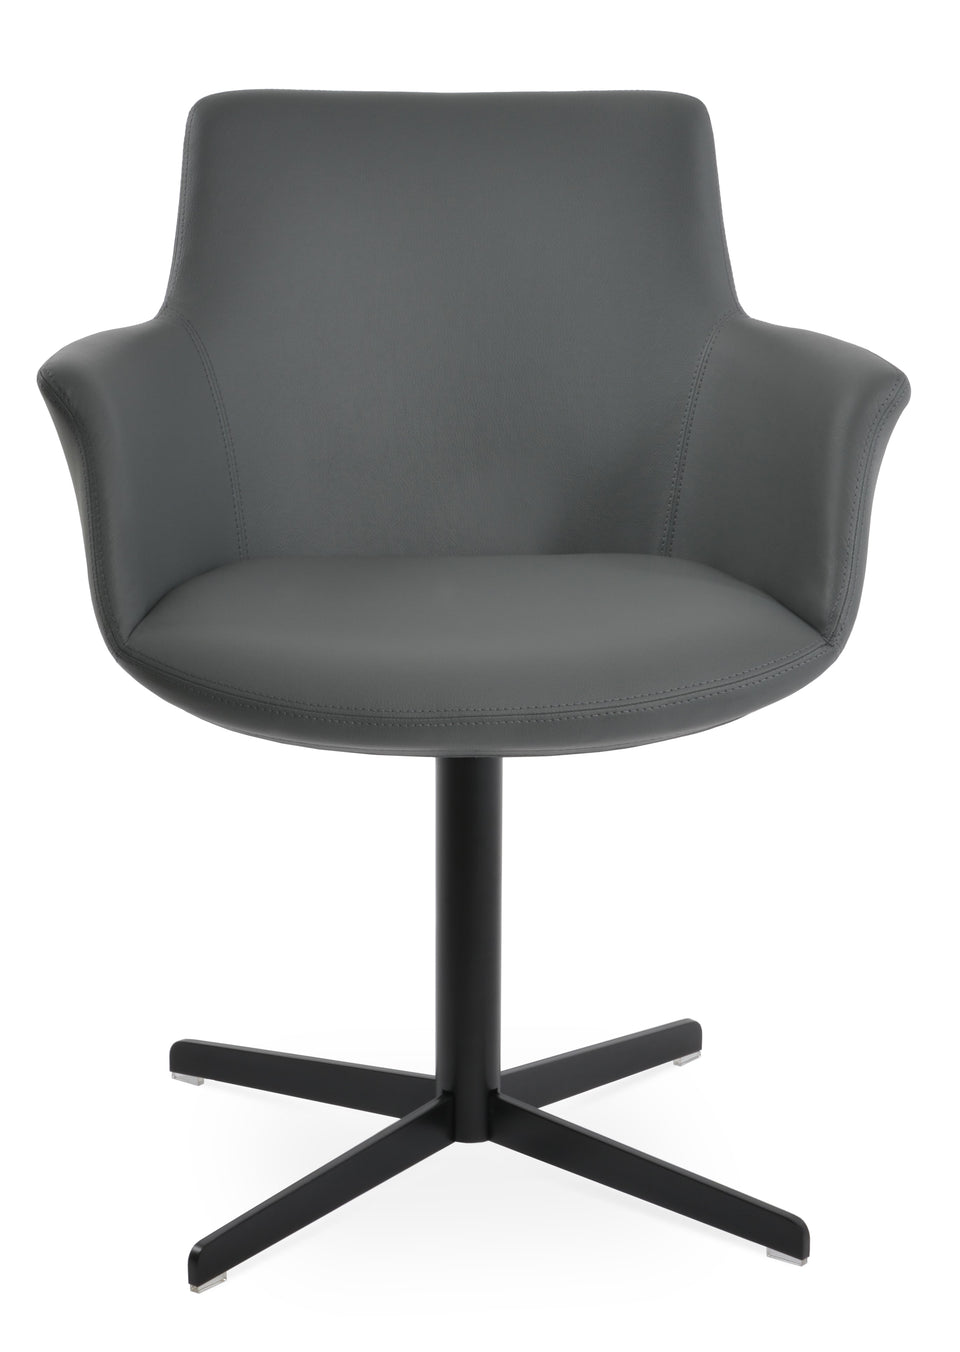 Bottega Arm 4 Star Swivel Chair.